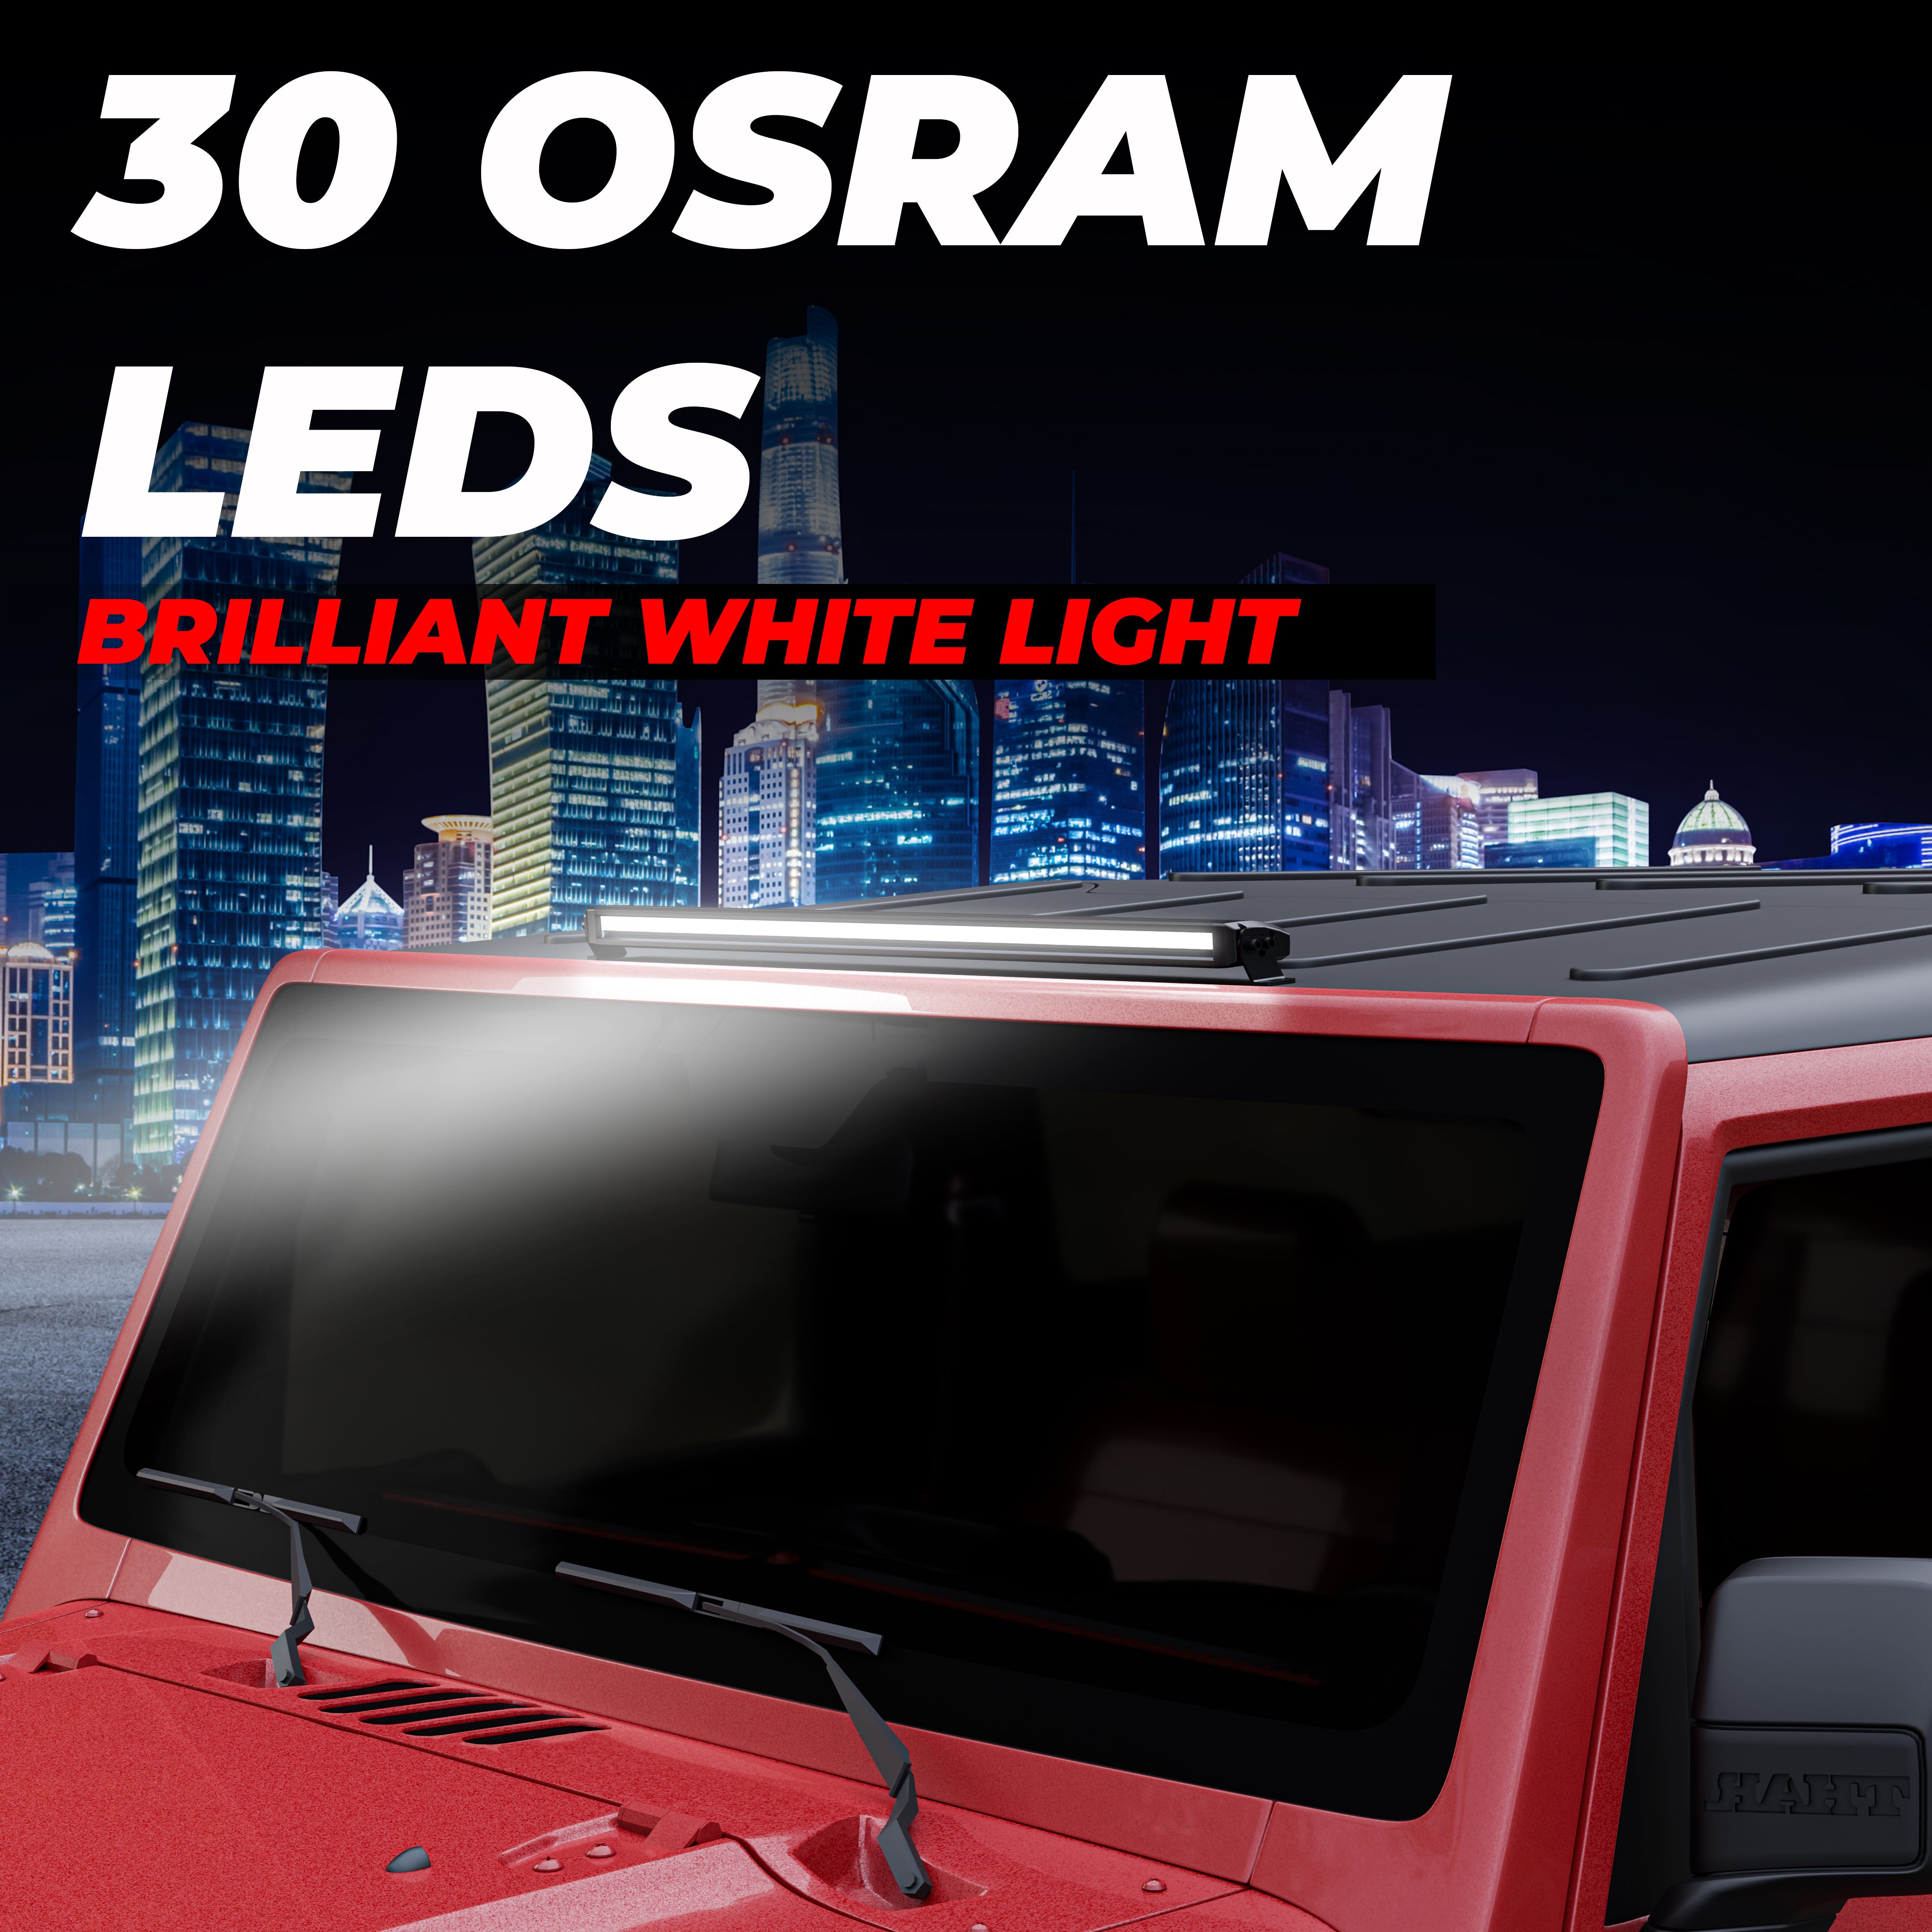 Barado 30 Inch Single Roof LED Light Bar | 150W | RGB Lights